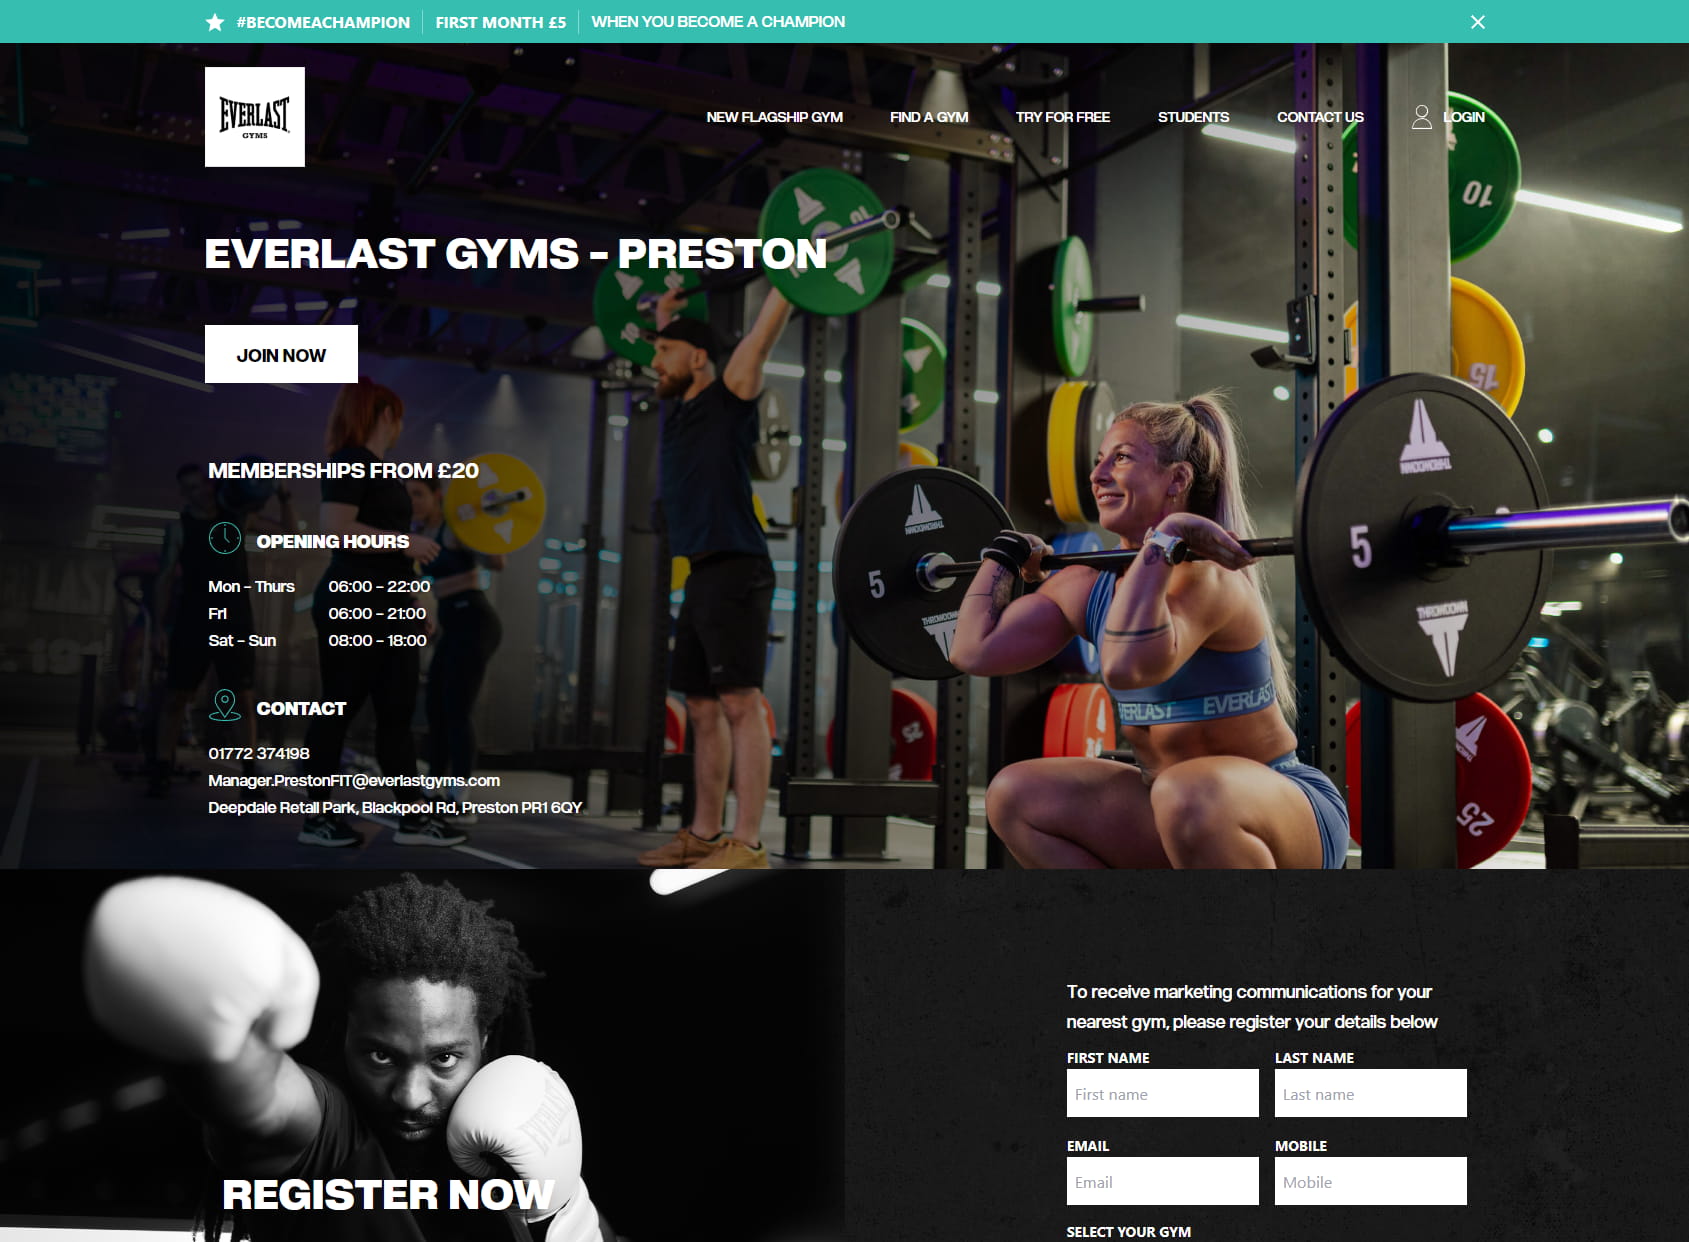 Everlast Gyms - Preston